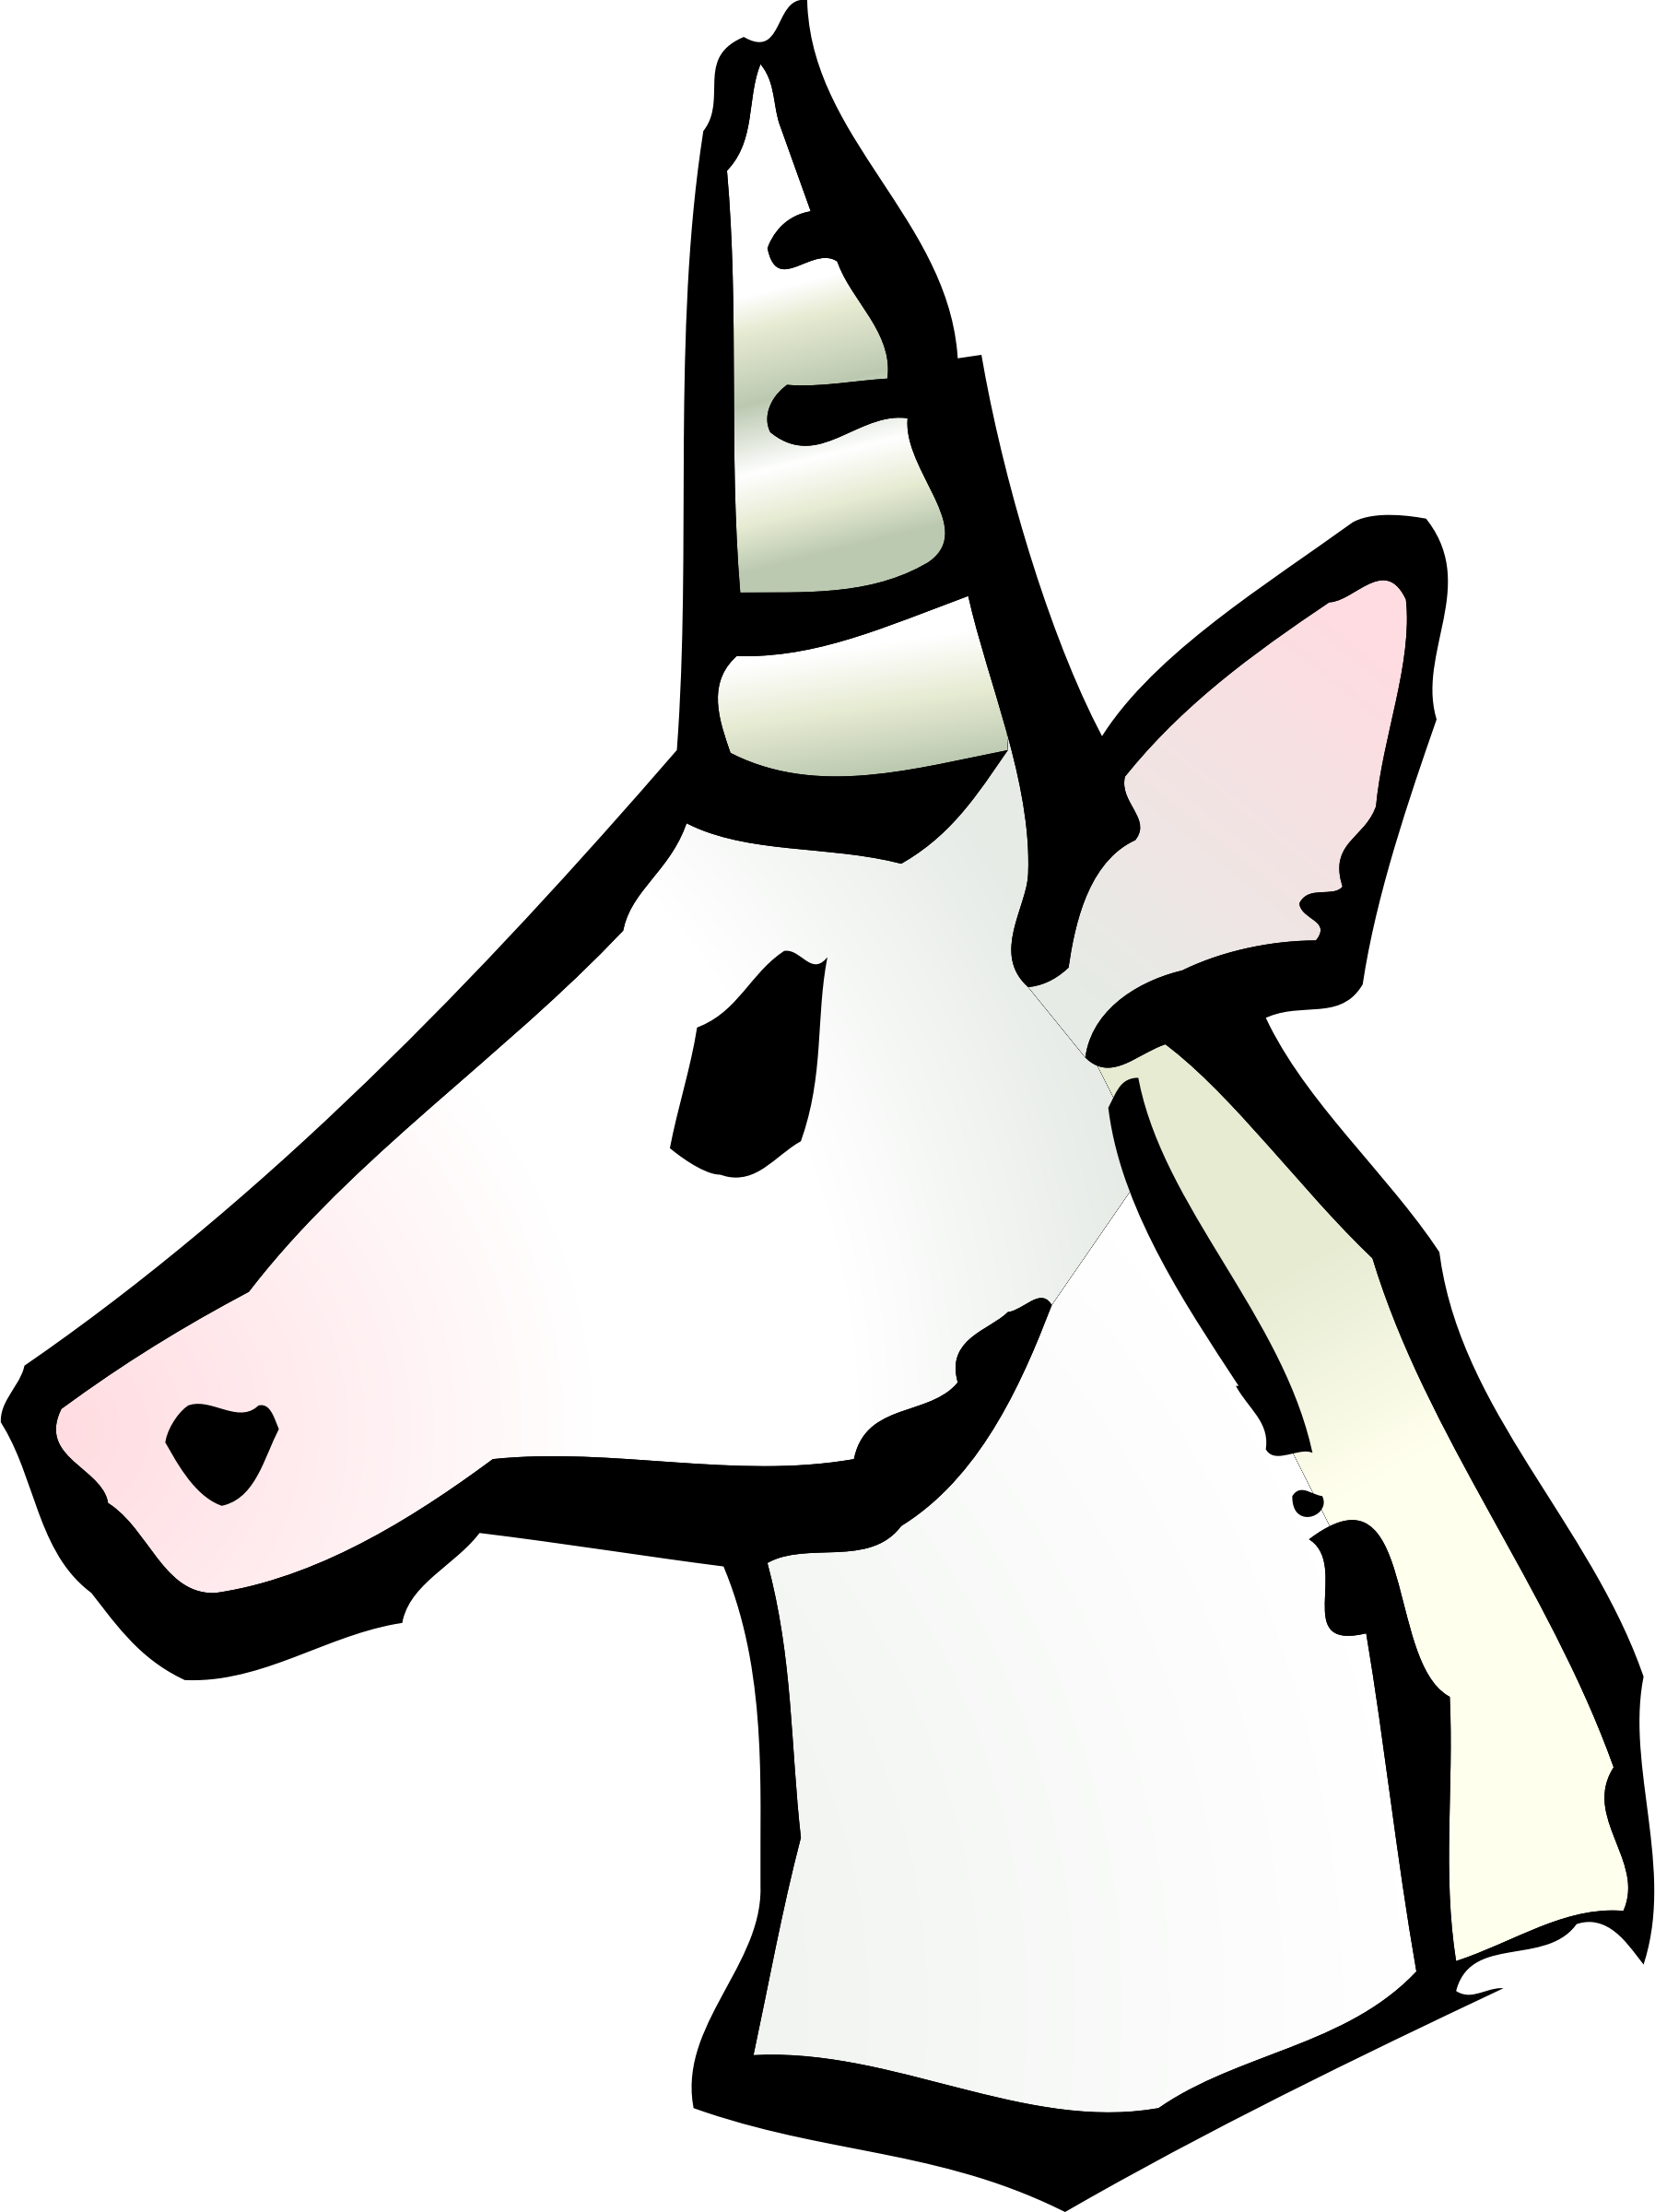 Medieval unicorn